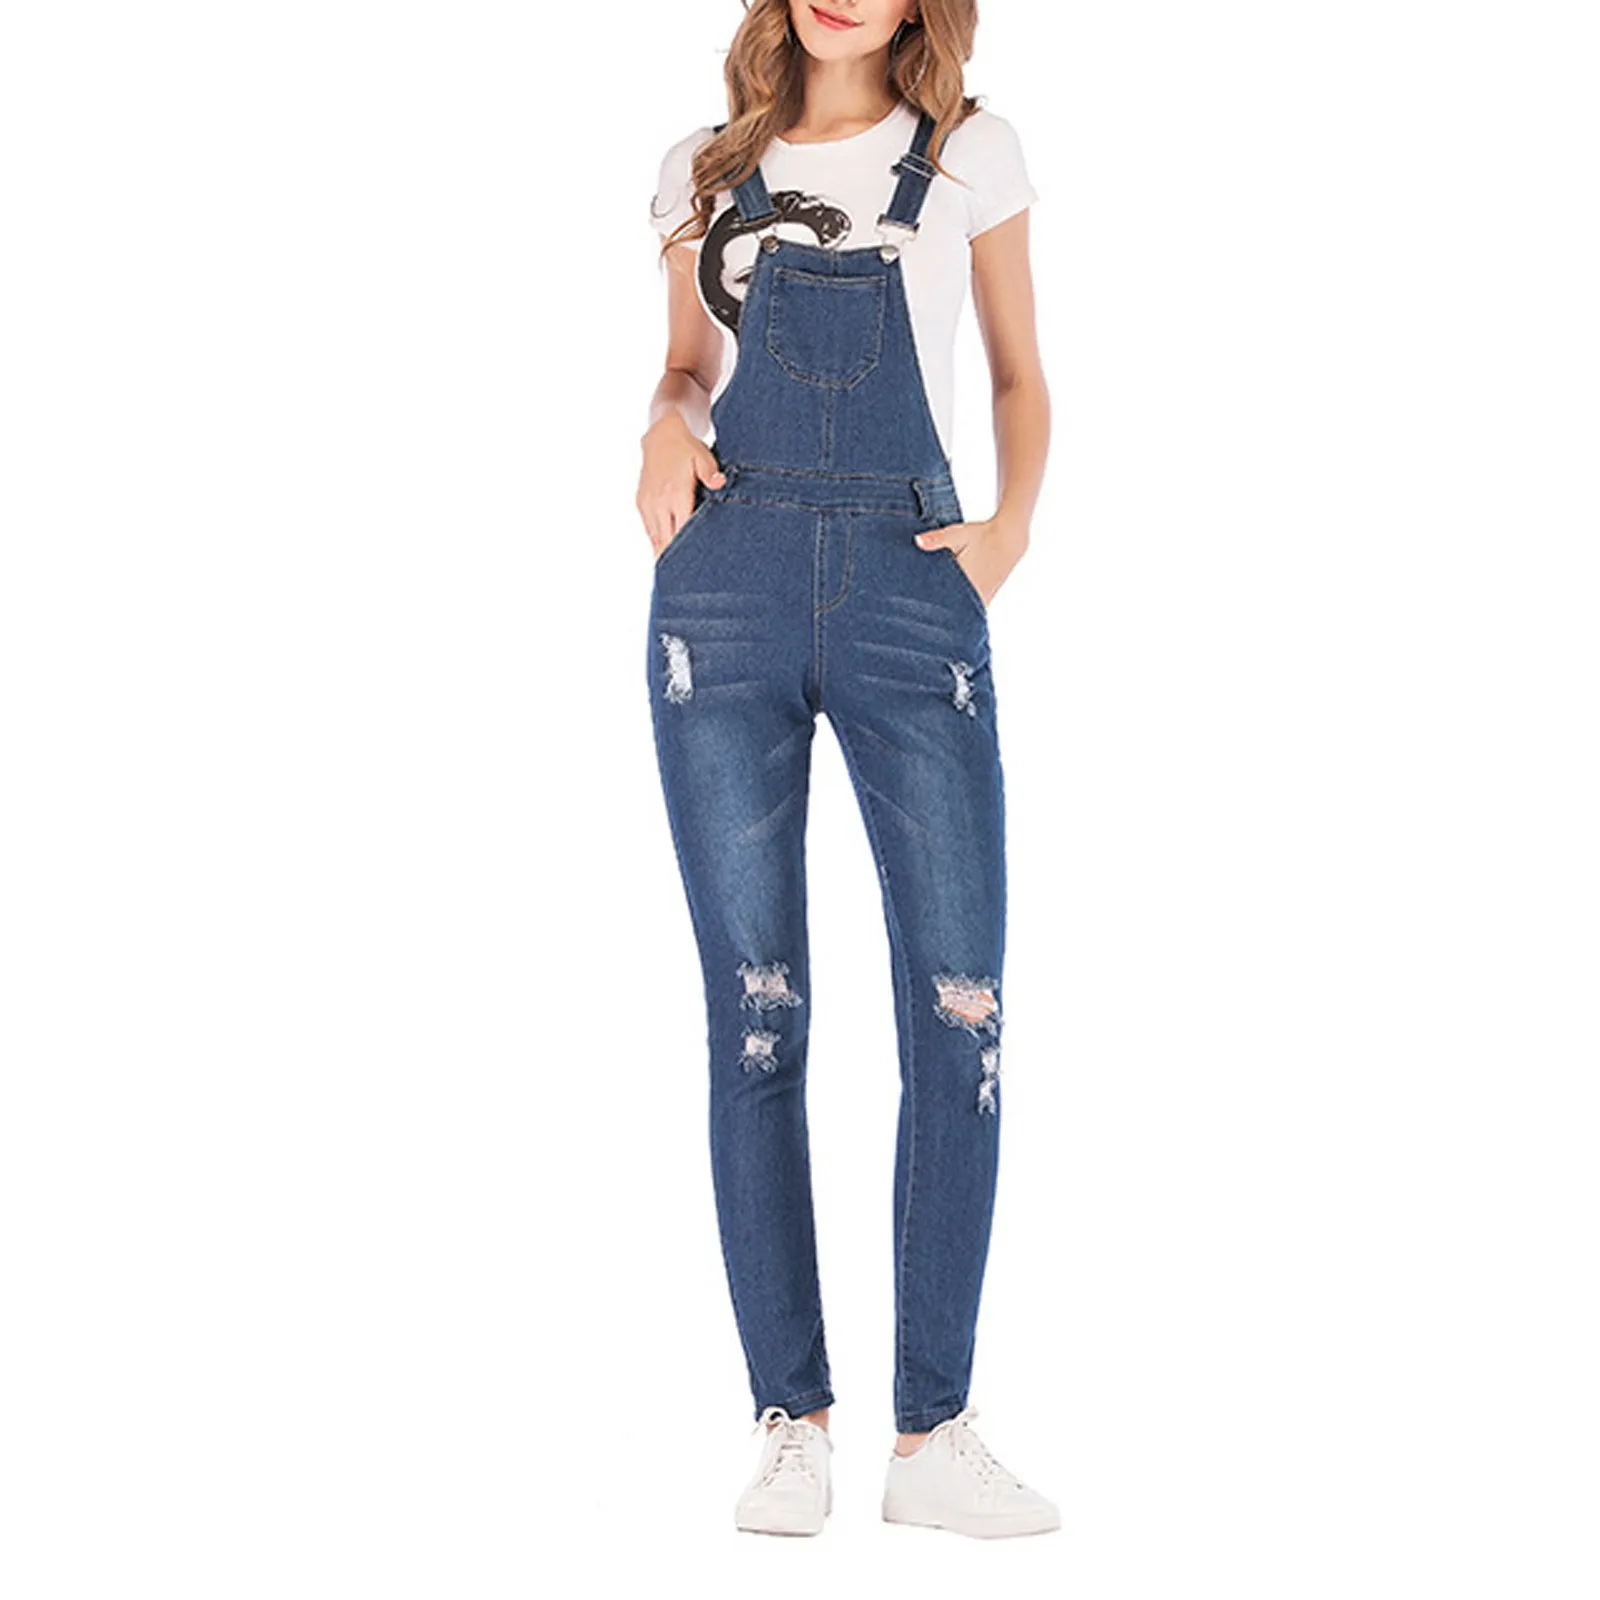 

Women Solid Color Belt Pocket Jeans Suspenders Casual Large Size Adjustable Strap Jumpsuits Jump Suit Bodysuits Romper For Women